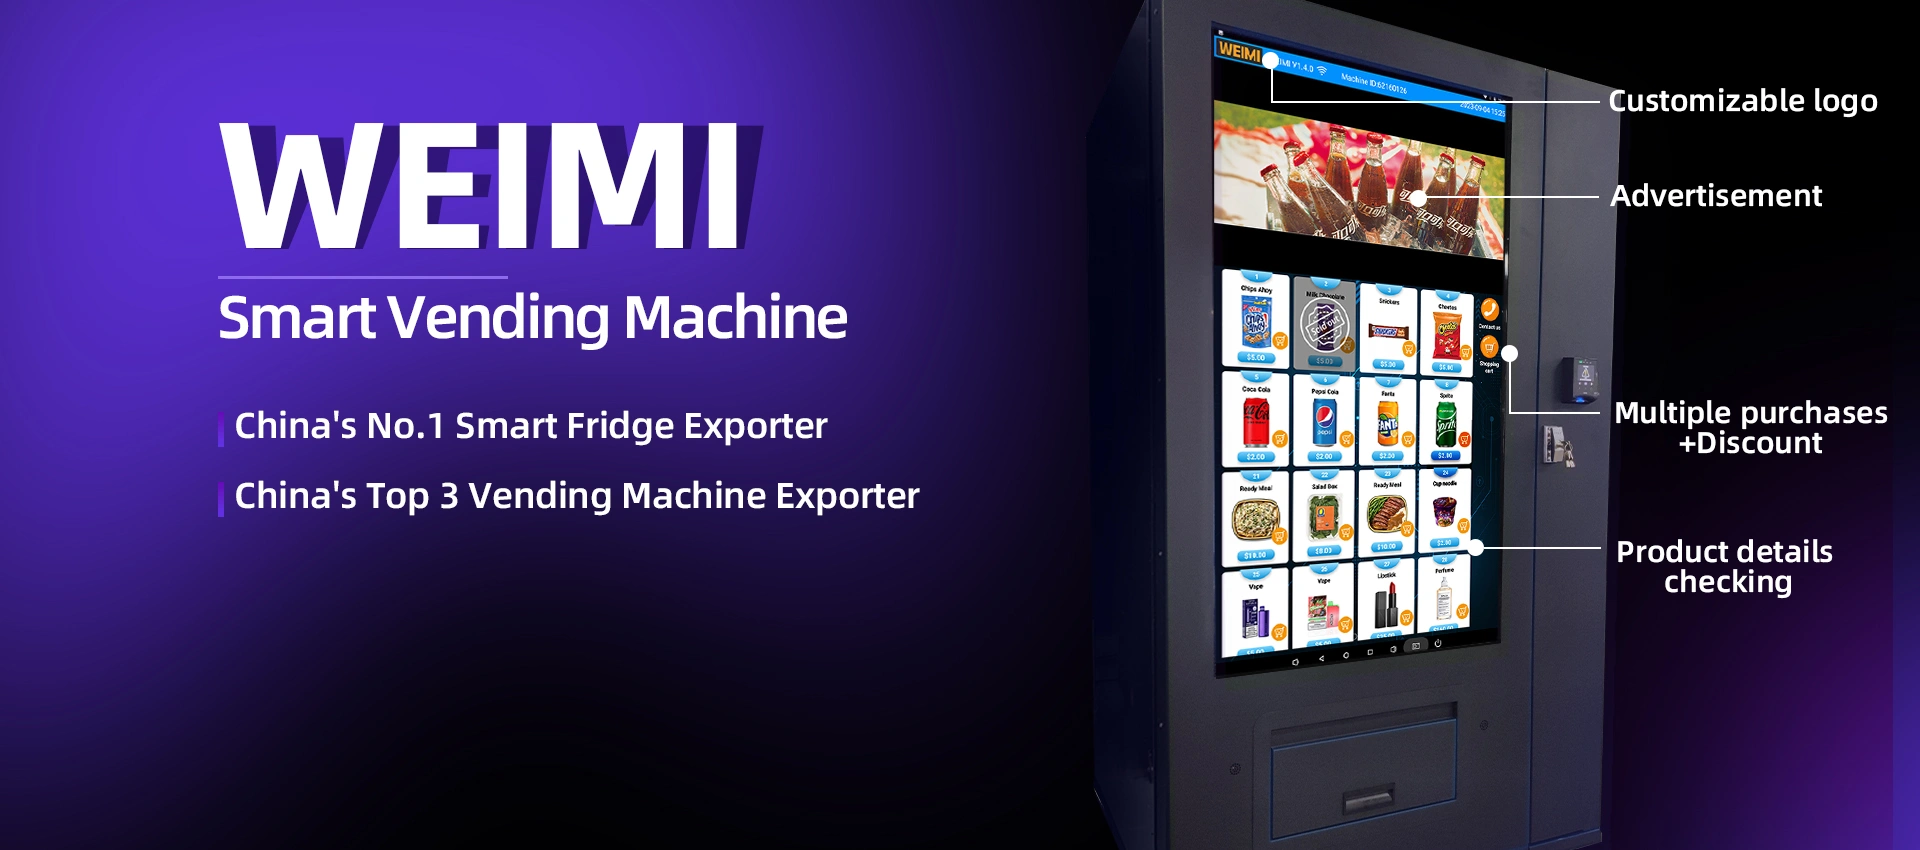 China's No.1 Smart Fridge Exporter
China's No.1 Vape Vending Machine Exporter
China's Top 3 Vending Machine Exporter
AI Vending Machine Leading Supplier